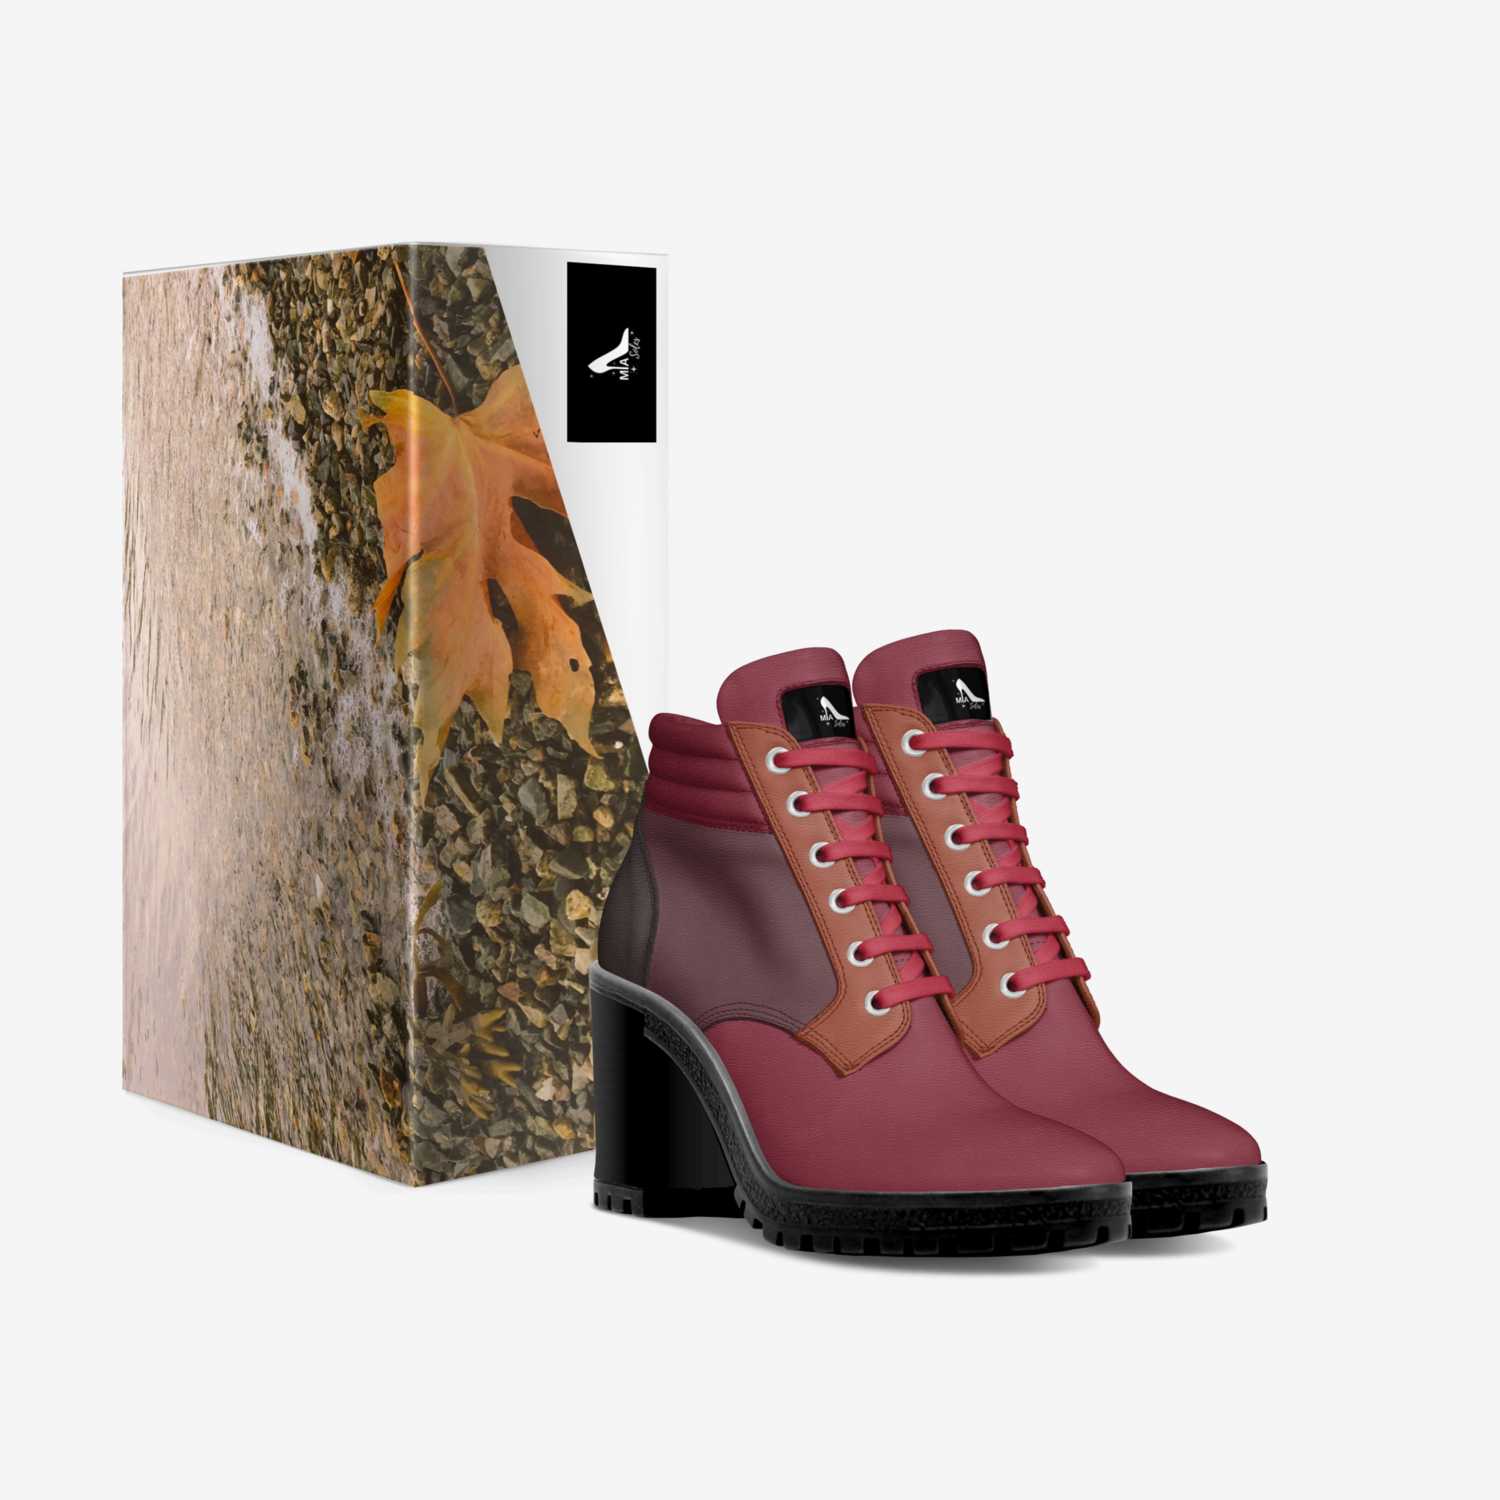 FallFetish custom made in Italy shoes by Aminah Khan | Box view